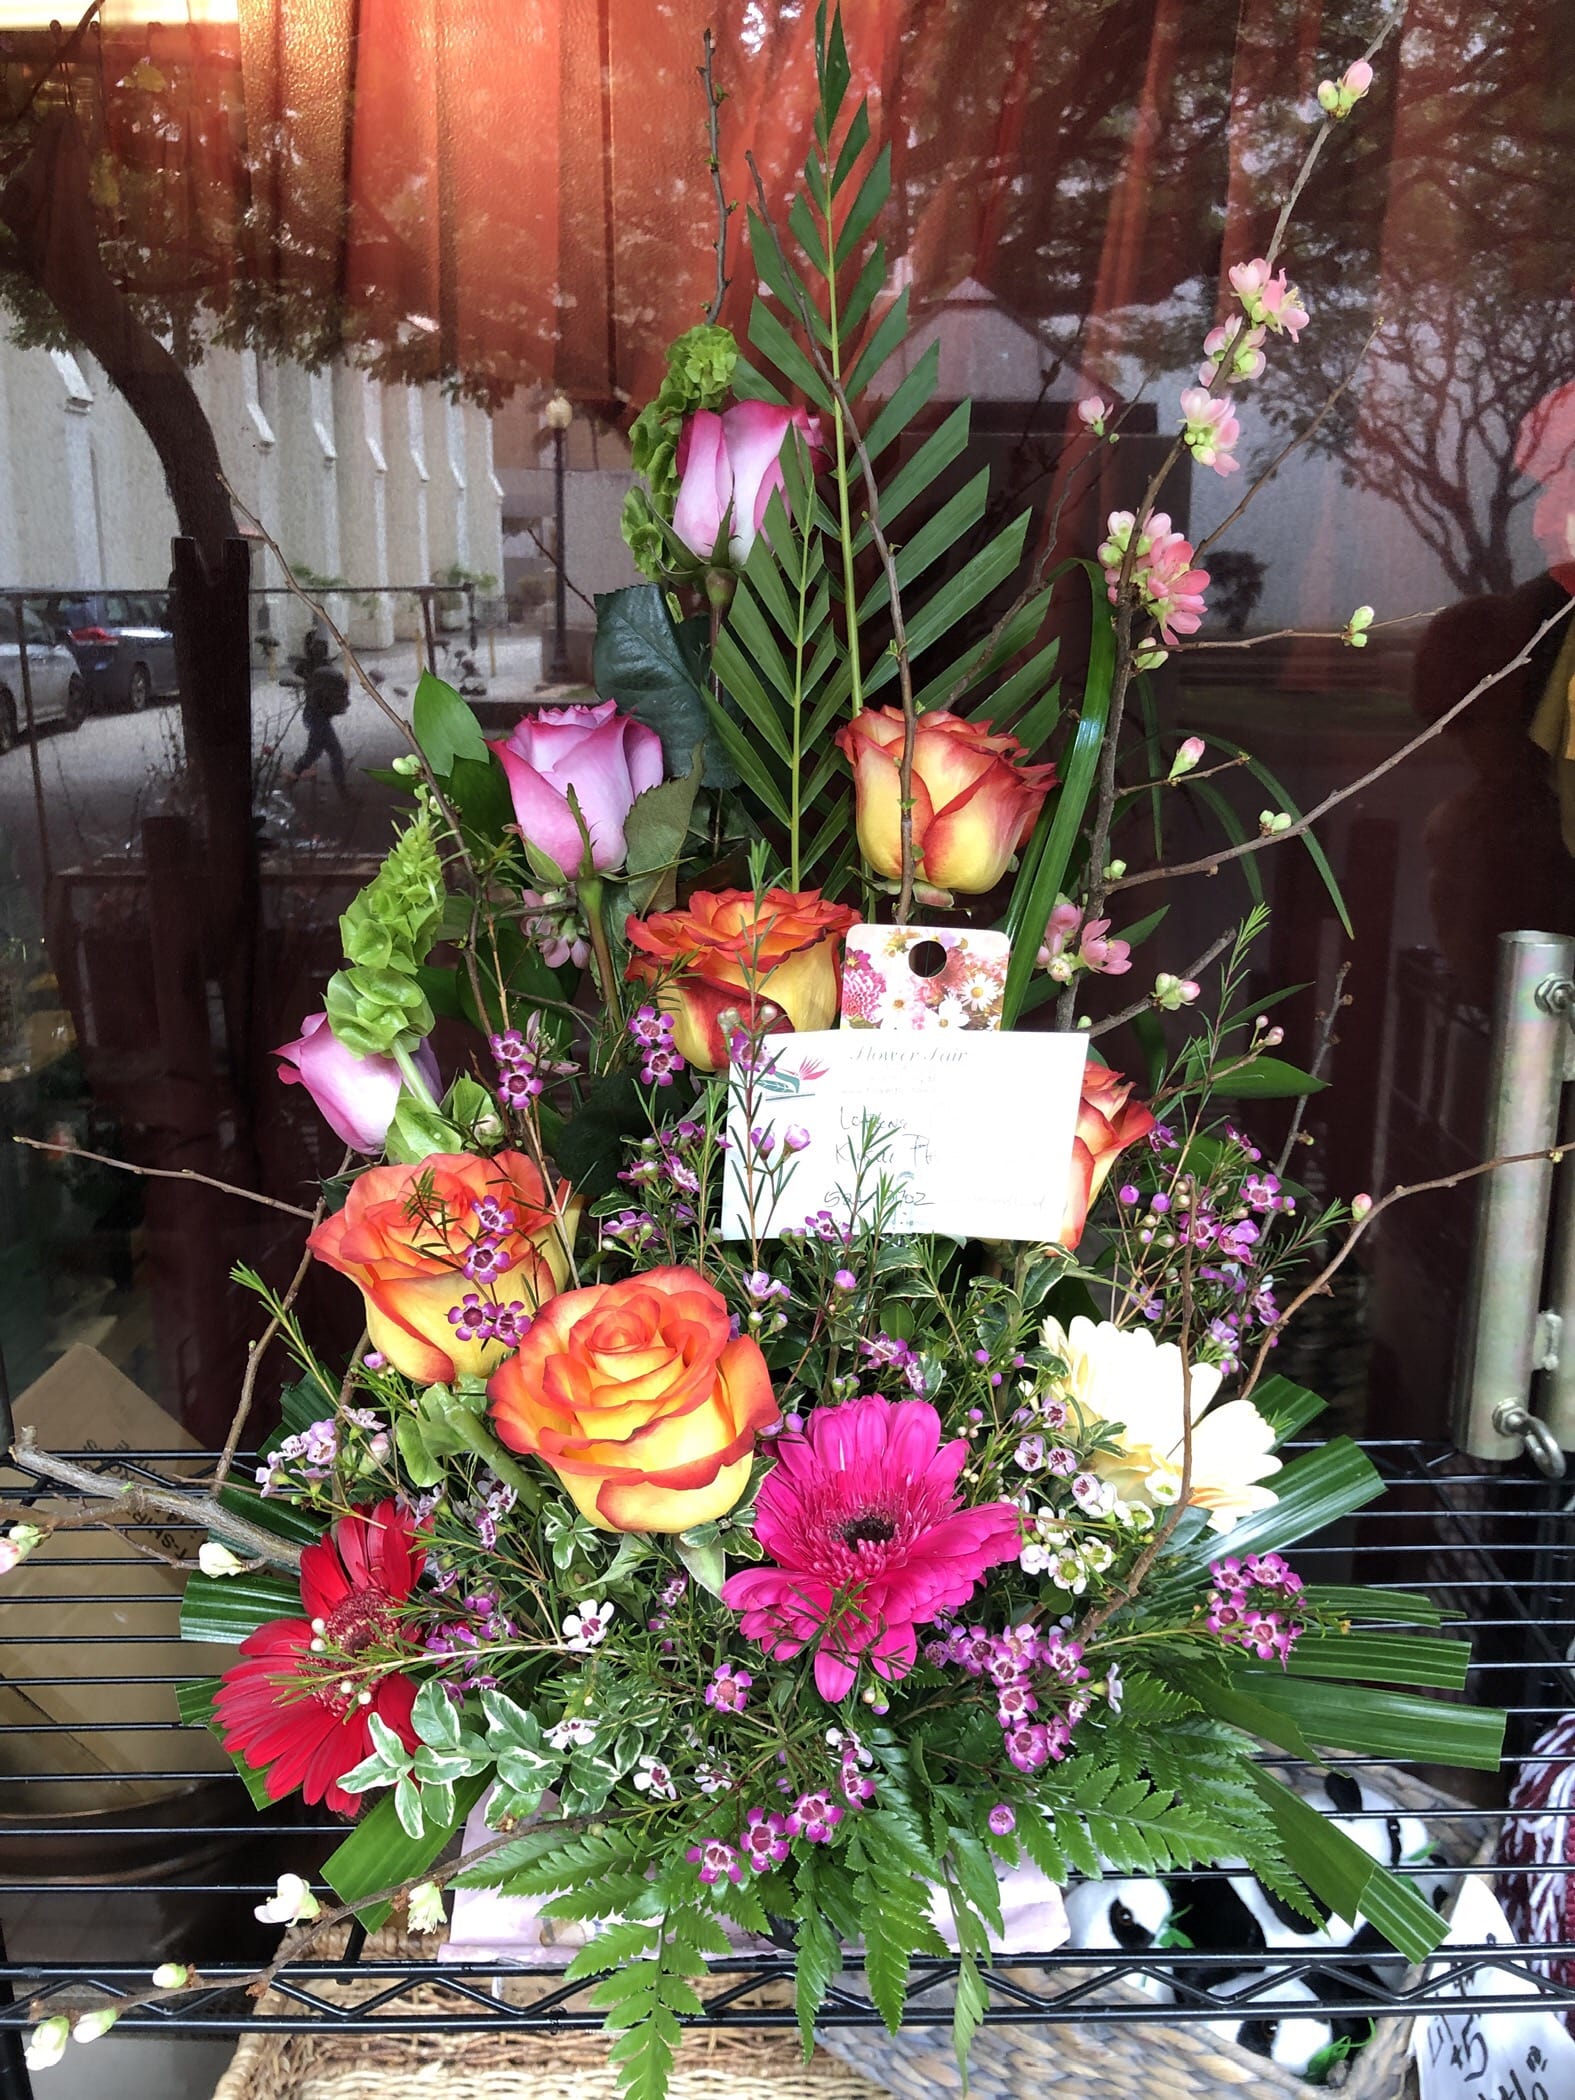 Roses and Gerbera Daisy arrangement BQ005 in Honolulu, HI | Flower Fair